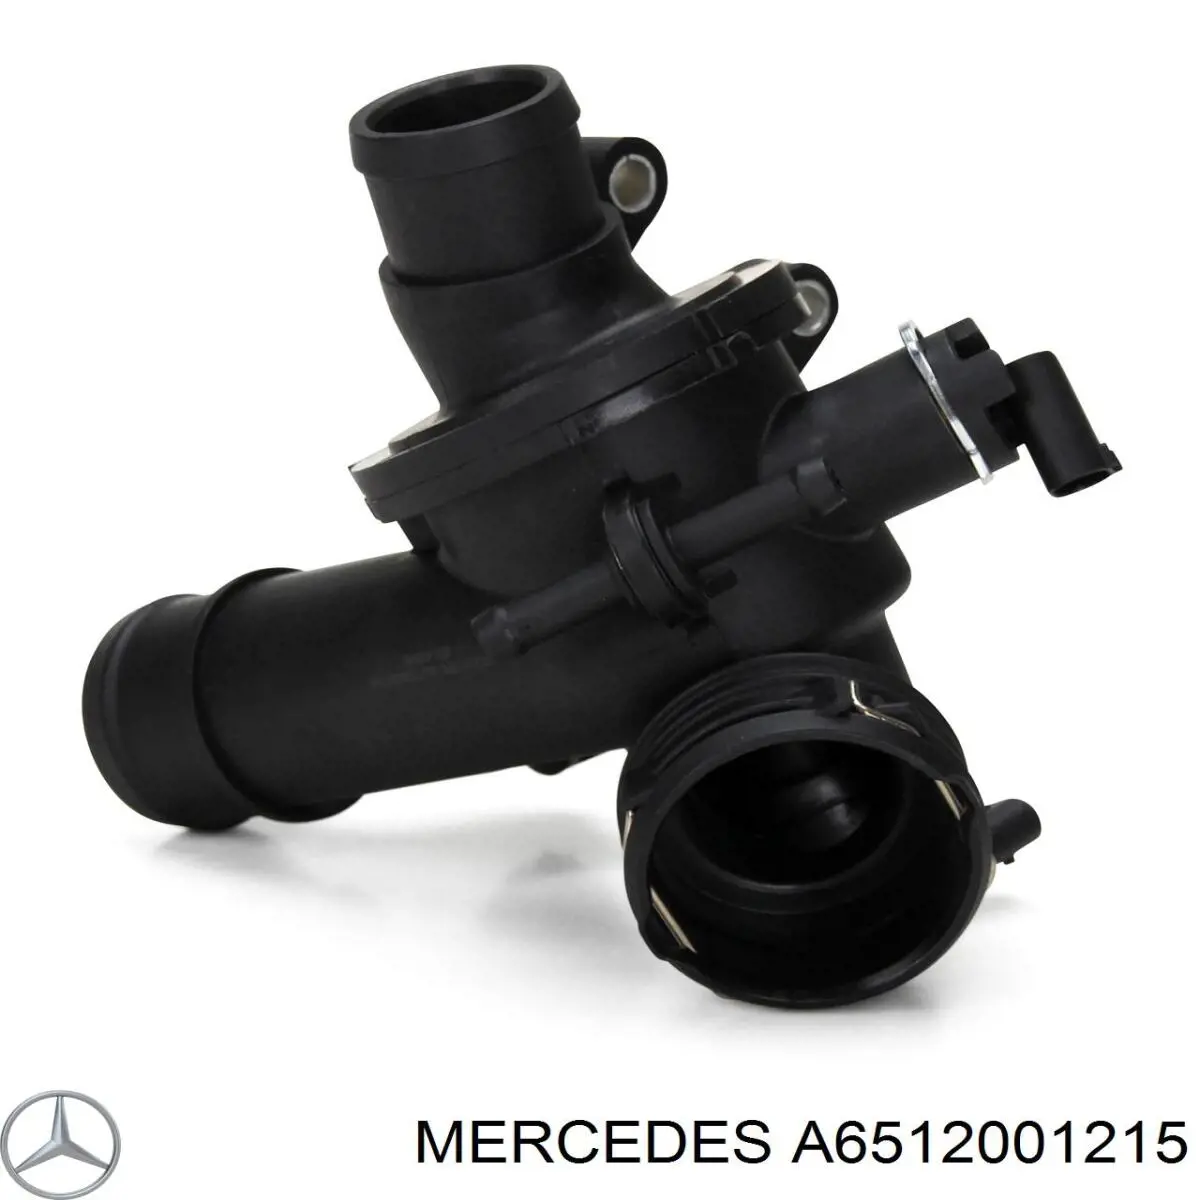 A6512001215 Mercedes termostato